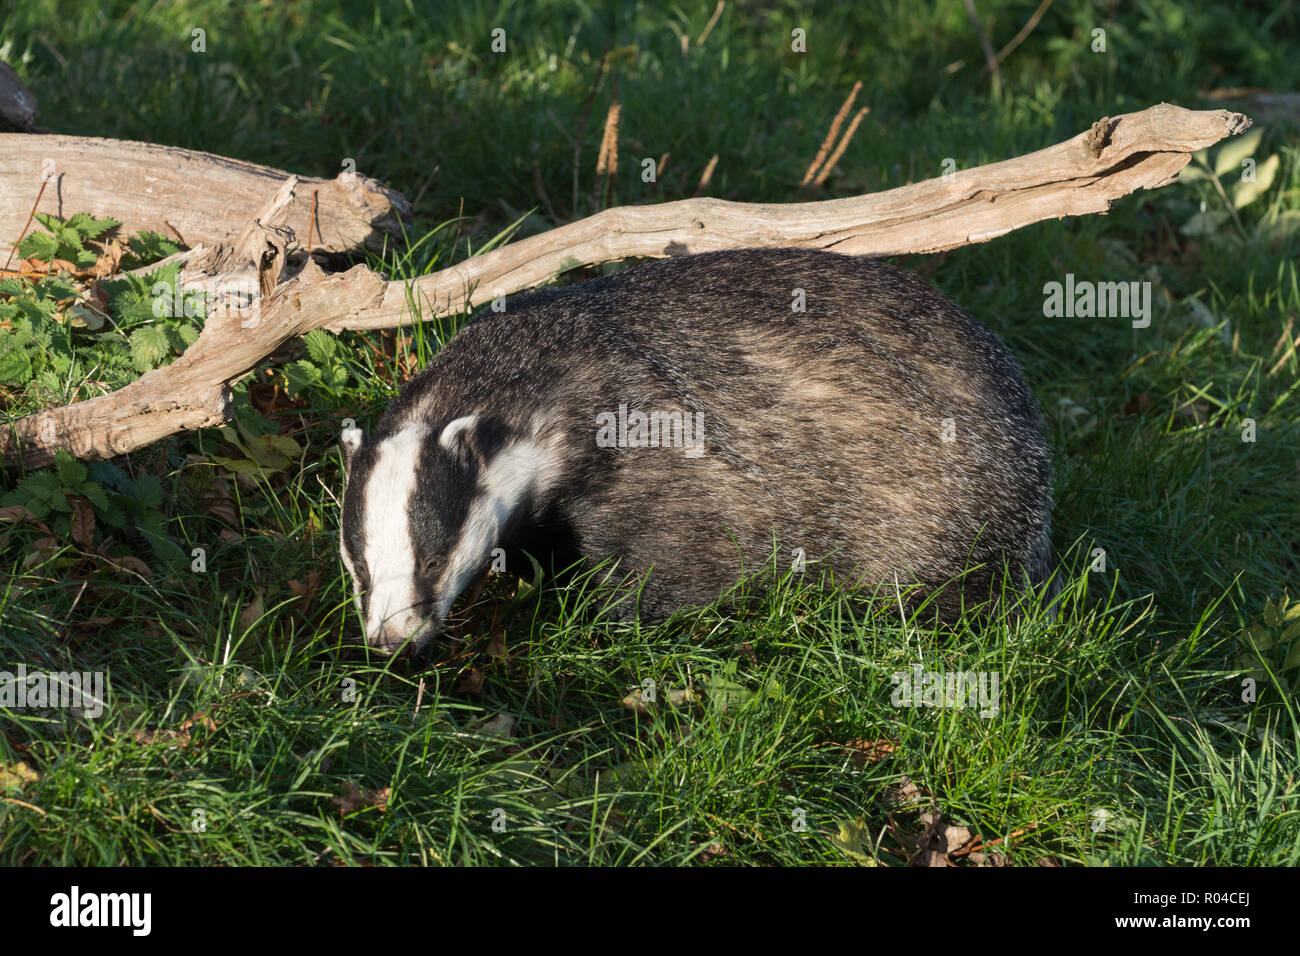 Badger (European or Eurasian badger, Meles meles), a mustelid species, in the UK Stock Photo